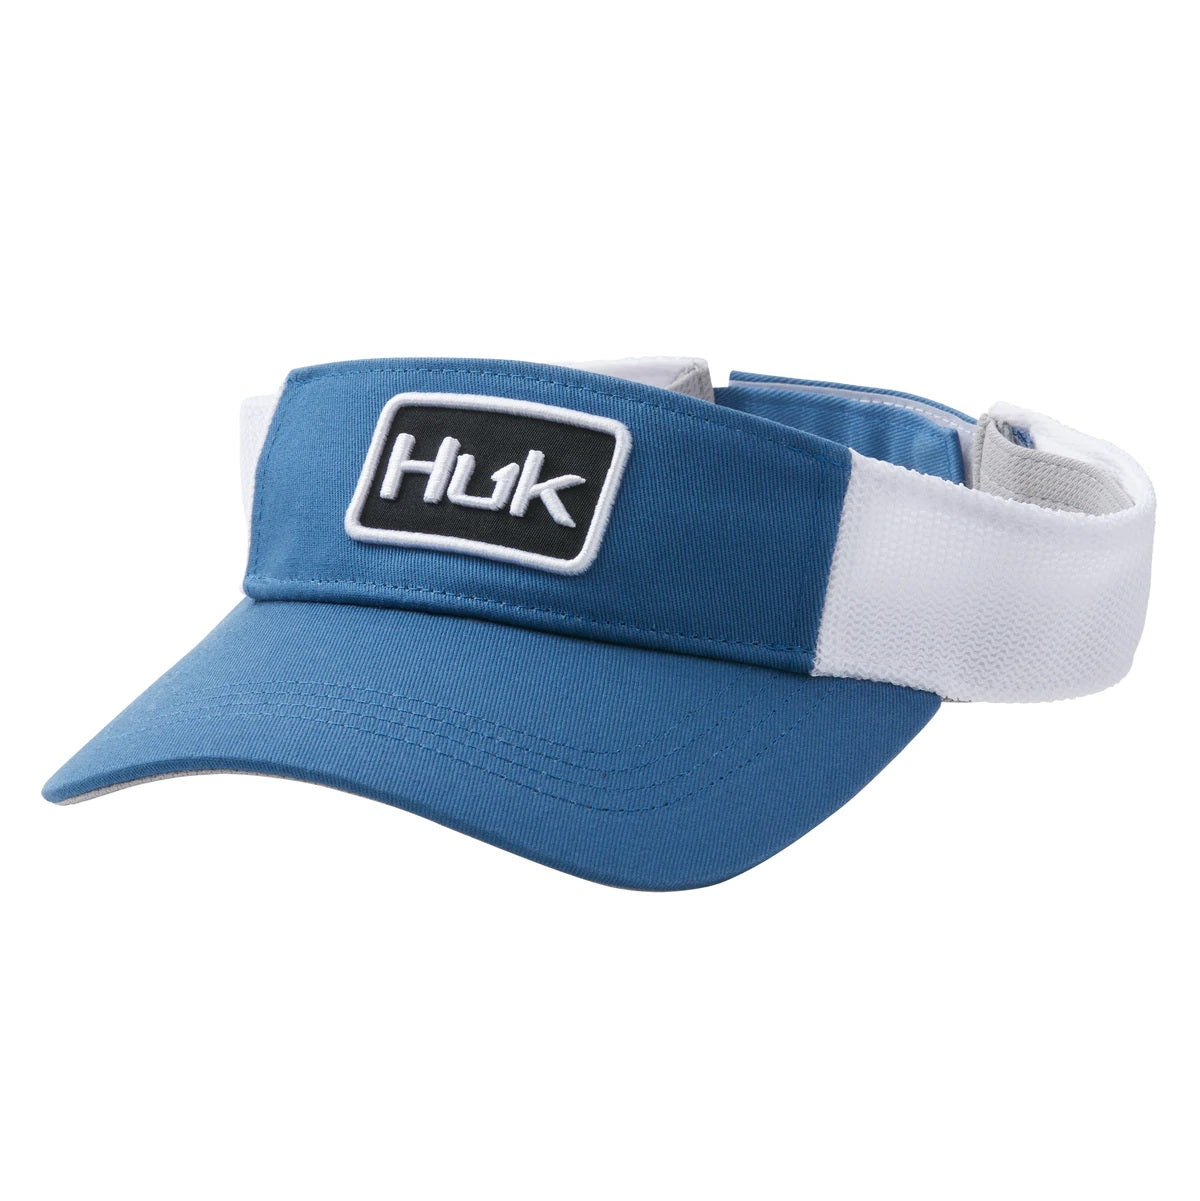 Huk Activewear